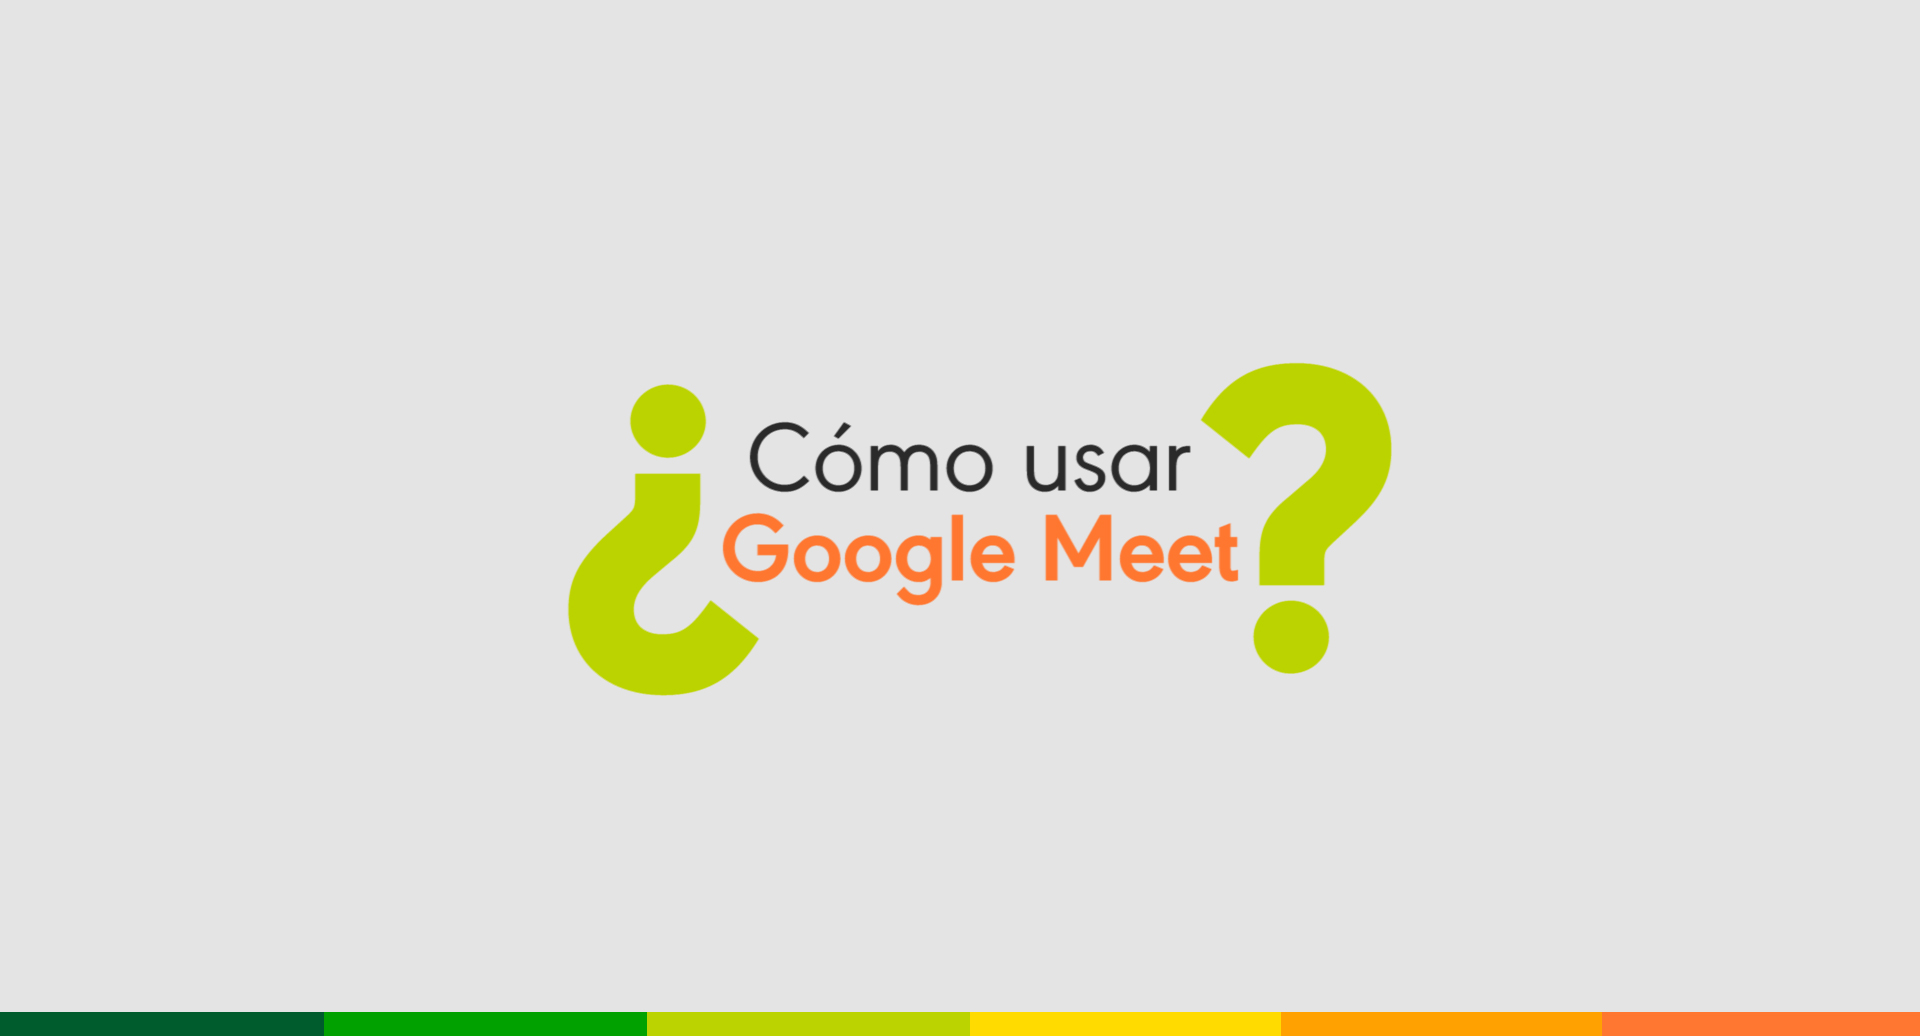 ¿Cómo usar Google Meet?